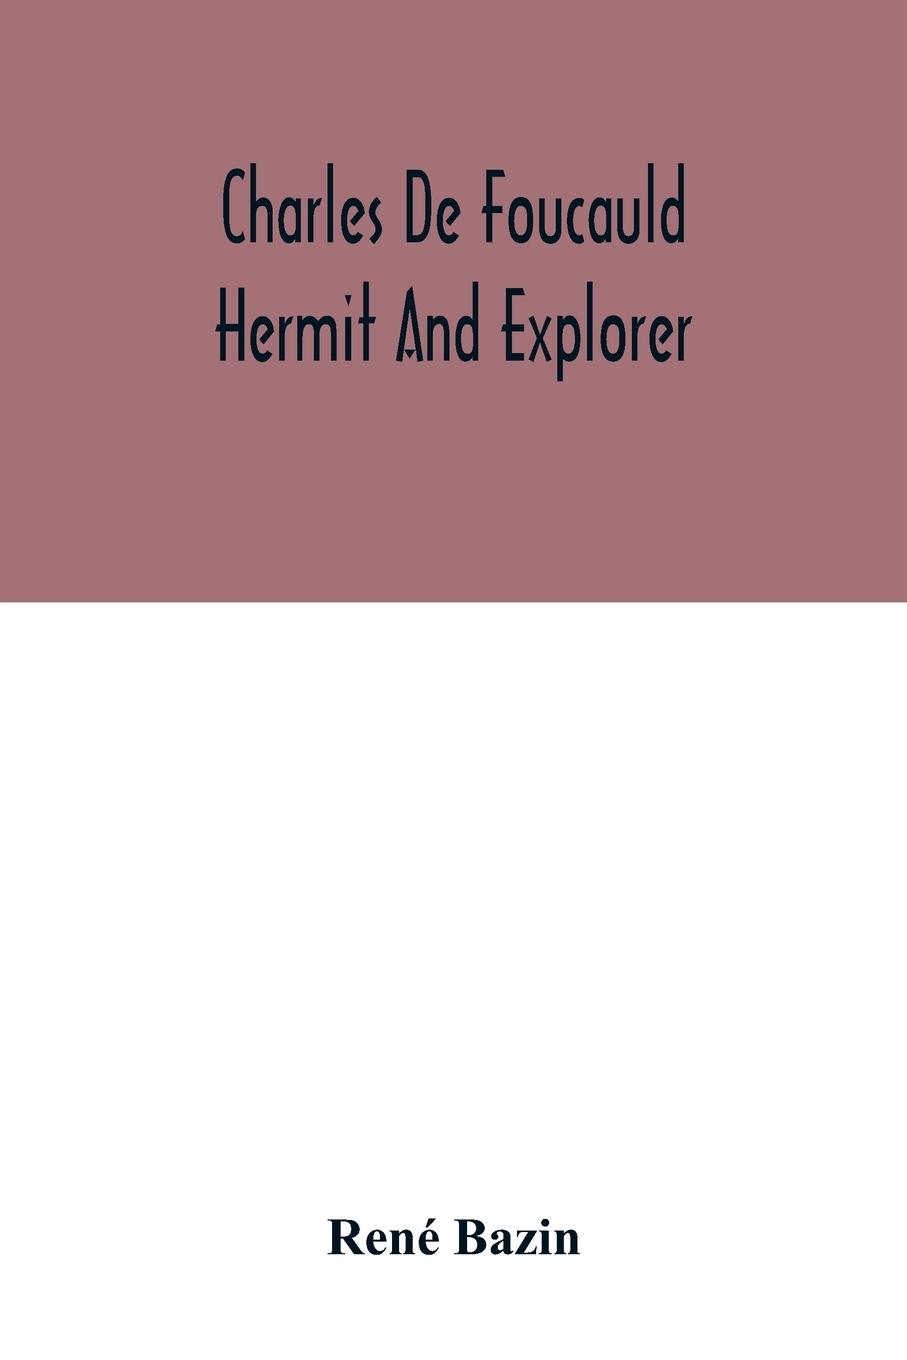 Book Charles De Foucauld Hermit And Explorer 